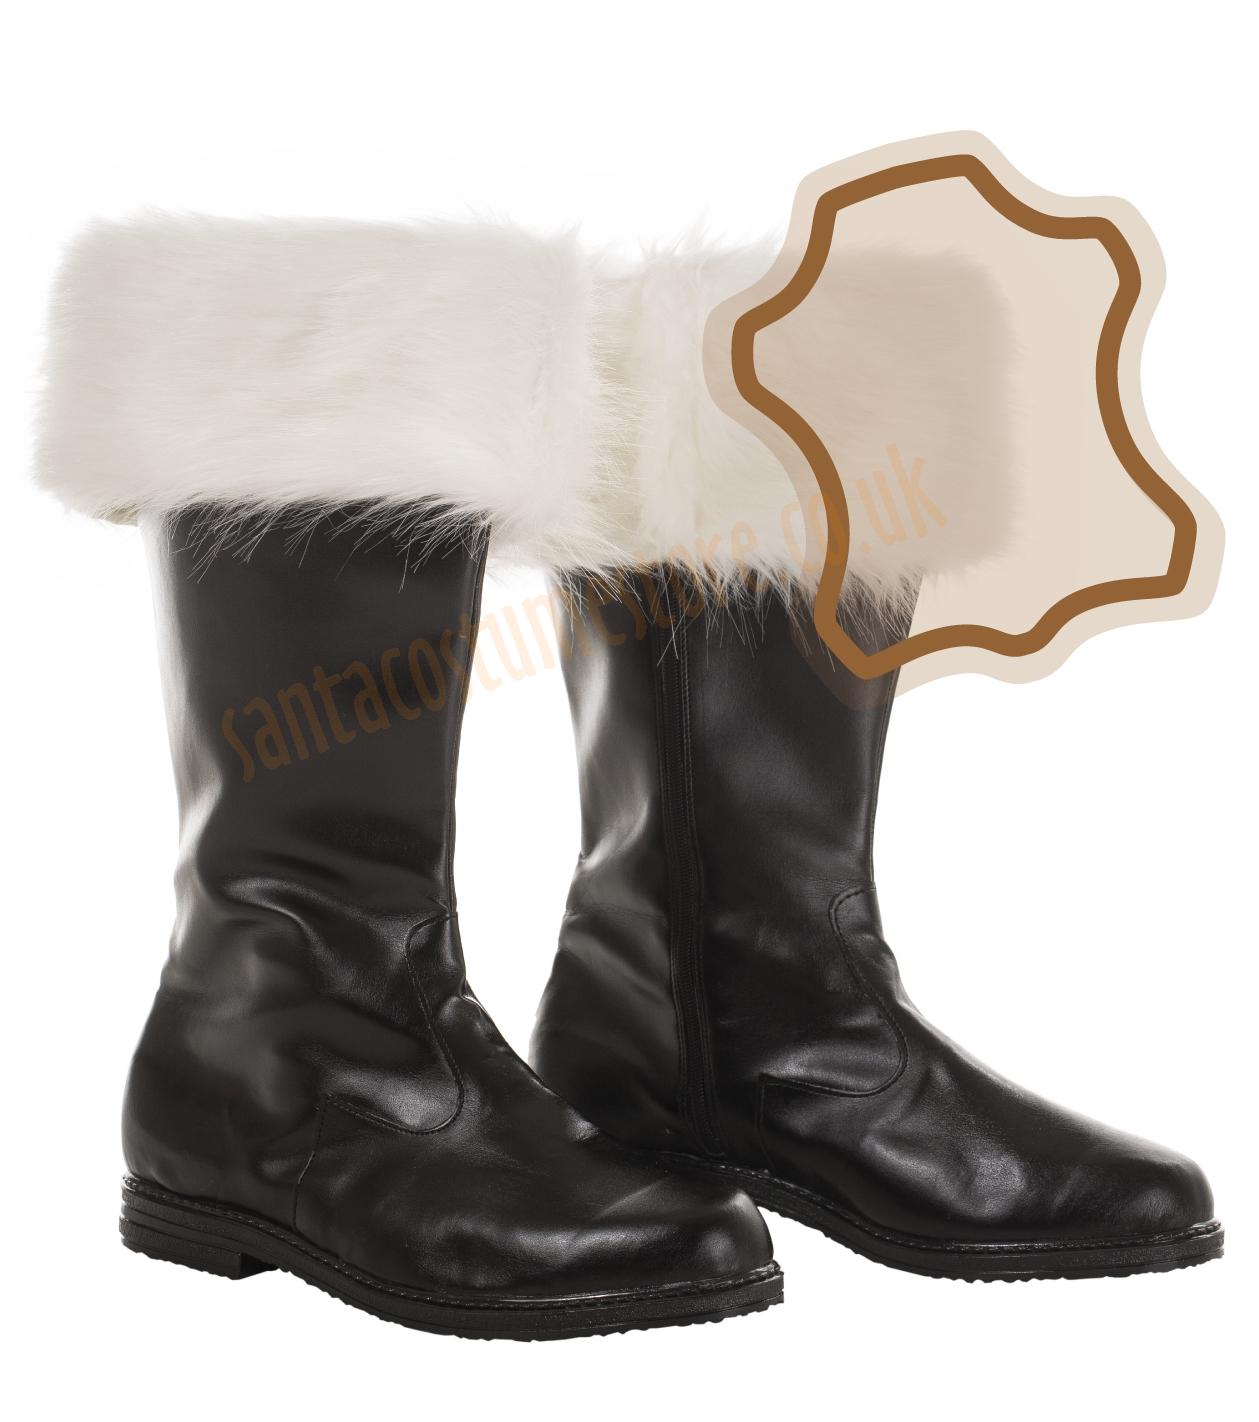 affix George Bernard gezagvoerder Real leather Santa boots (ecru faux fur) - Santa Suits